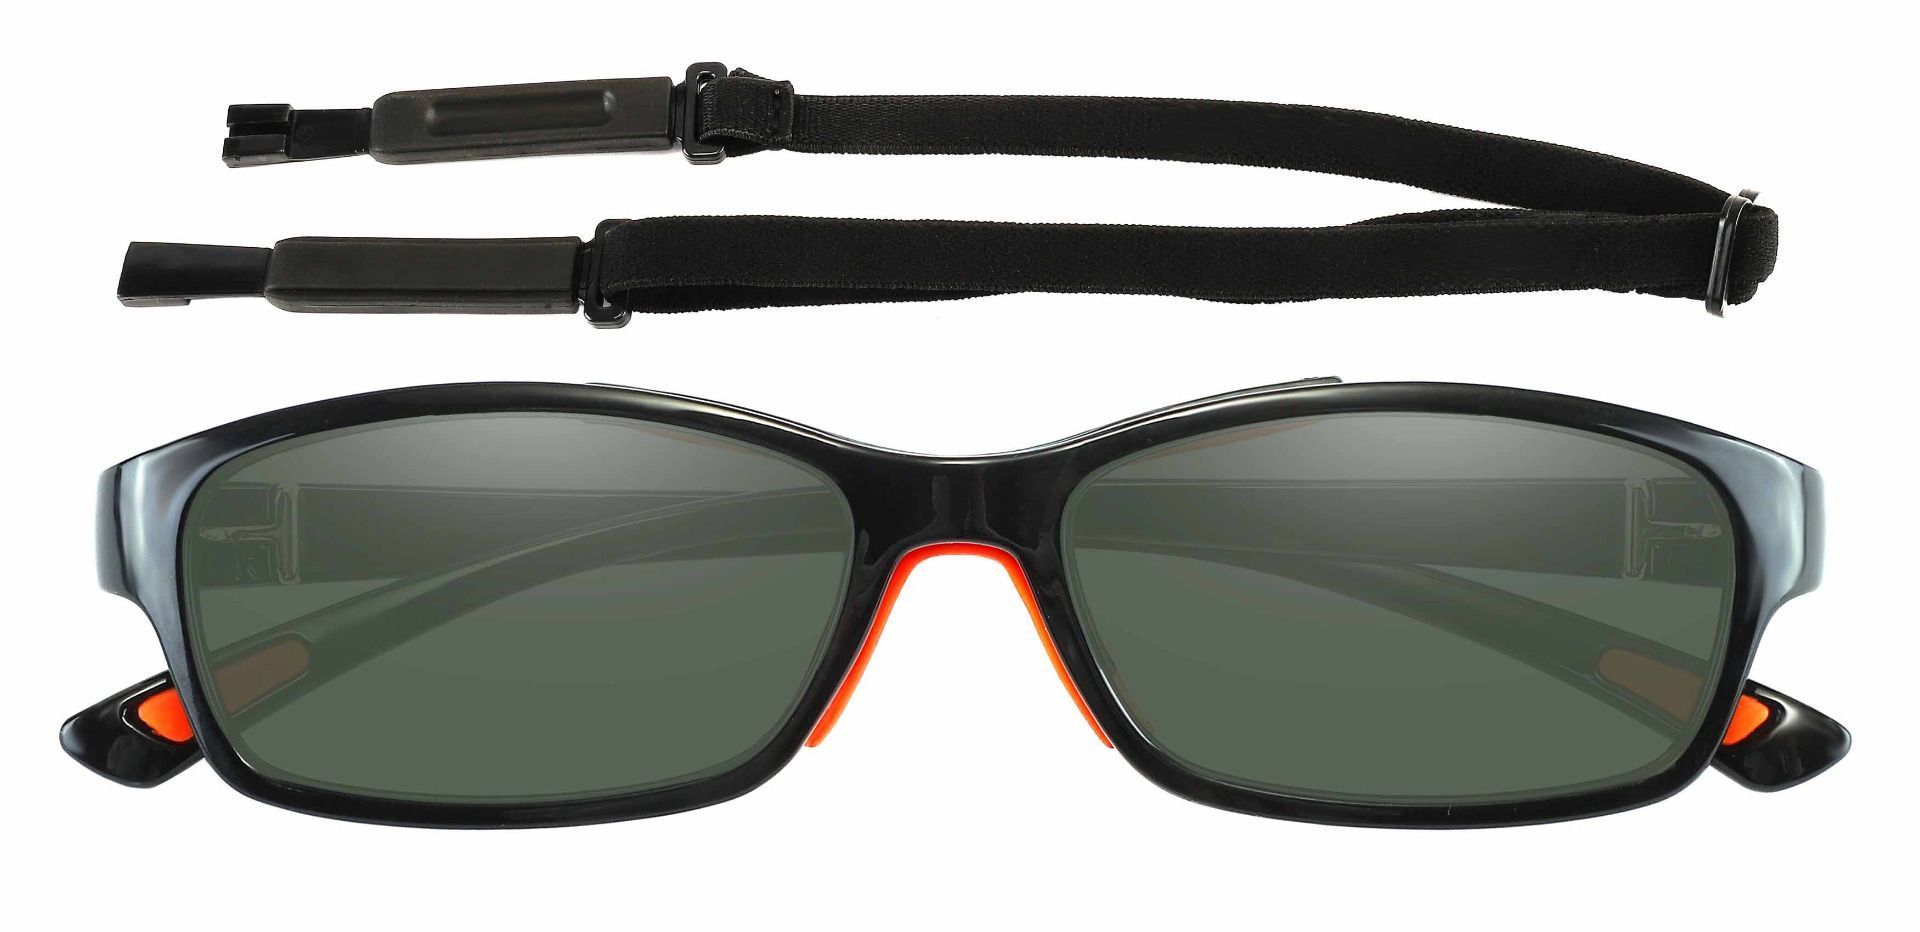 Glynn Rectangle Non-Rx Sunglasses - Black Frame With Green Lenses